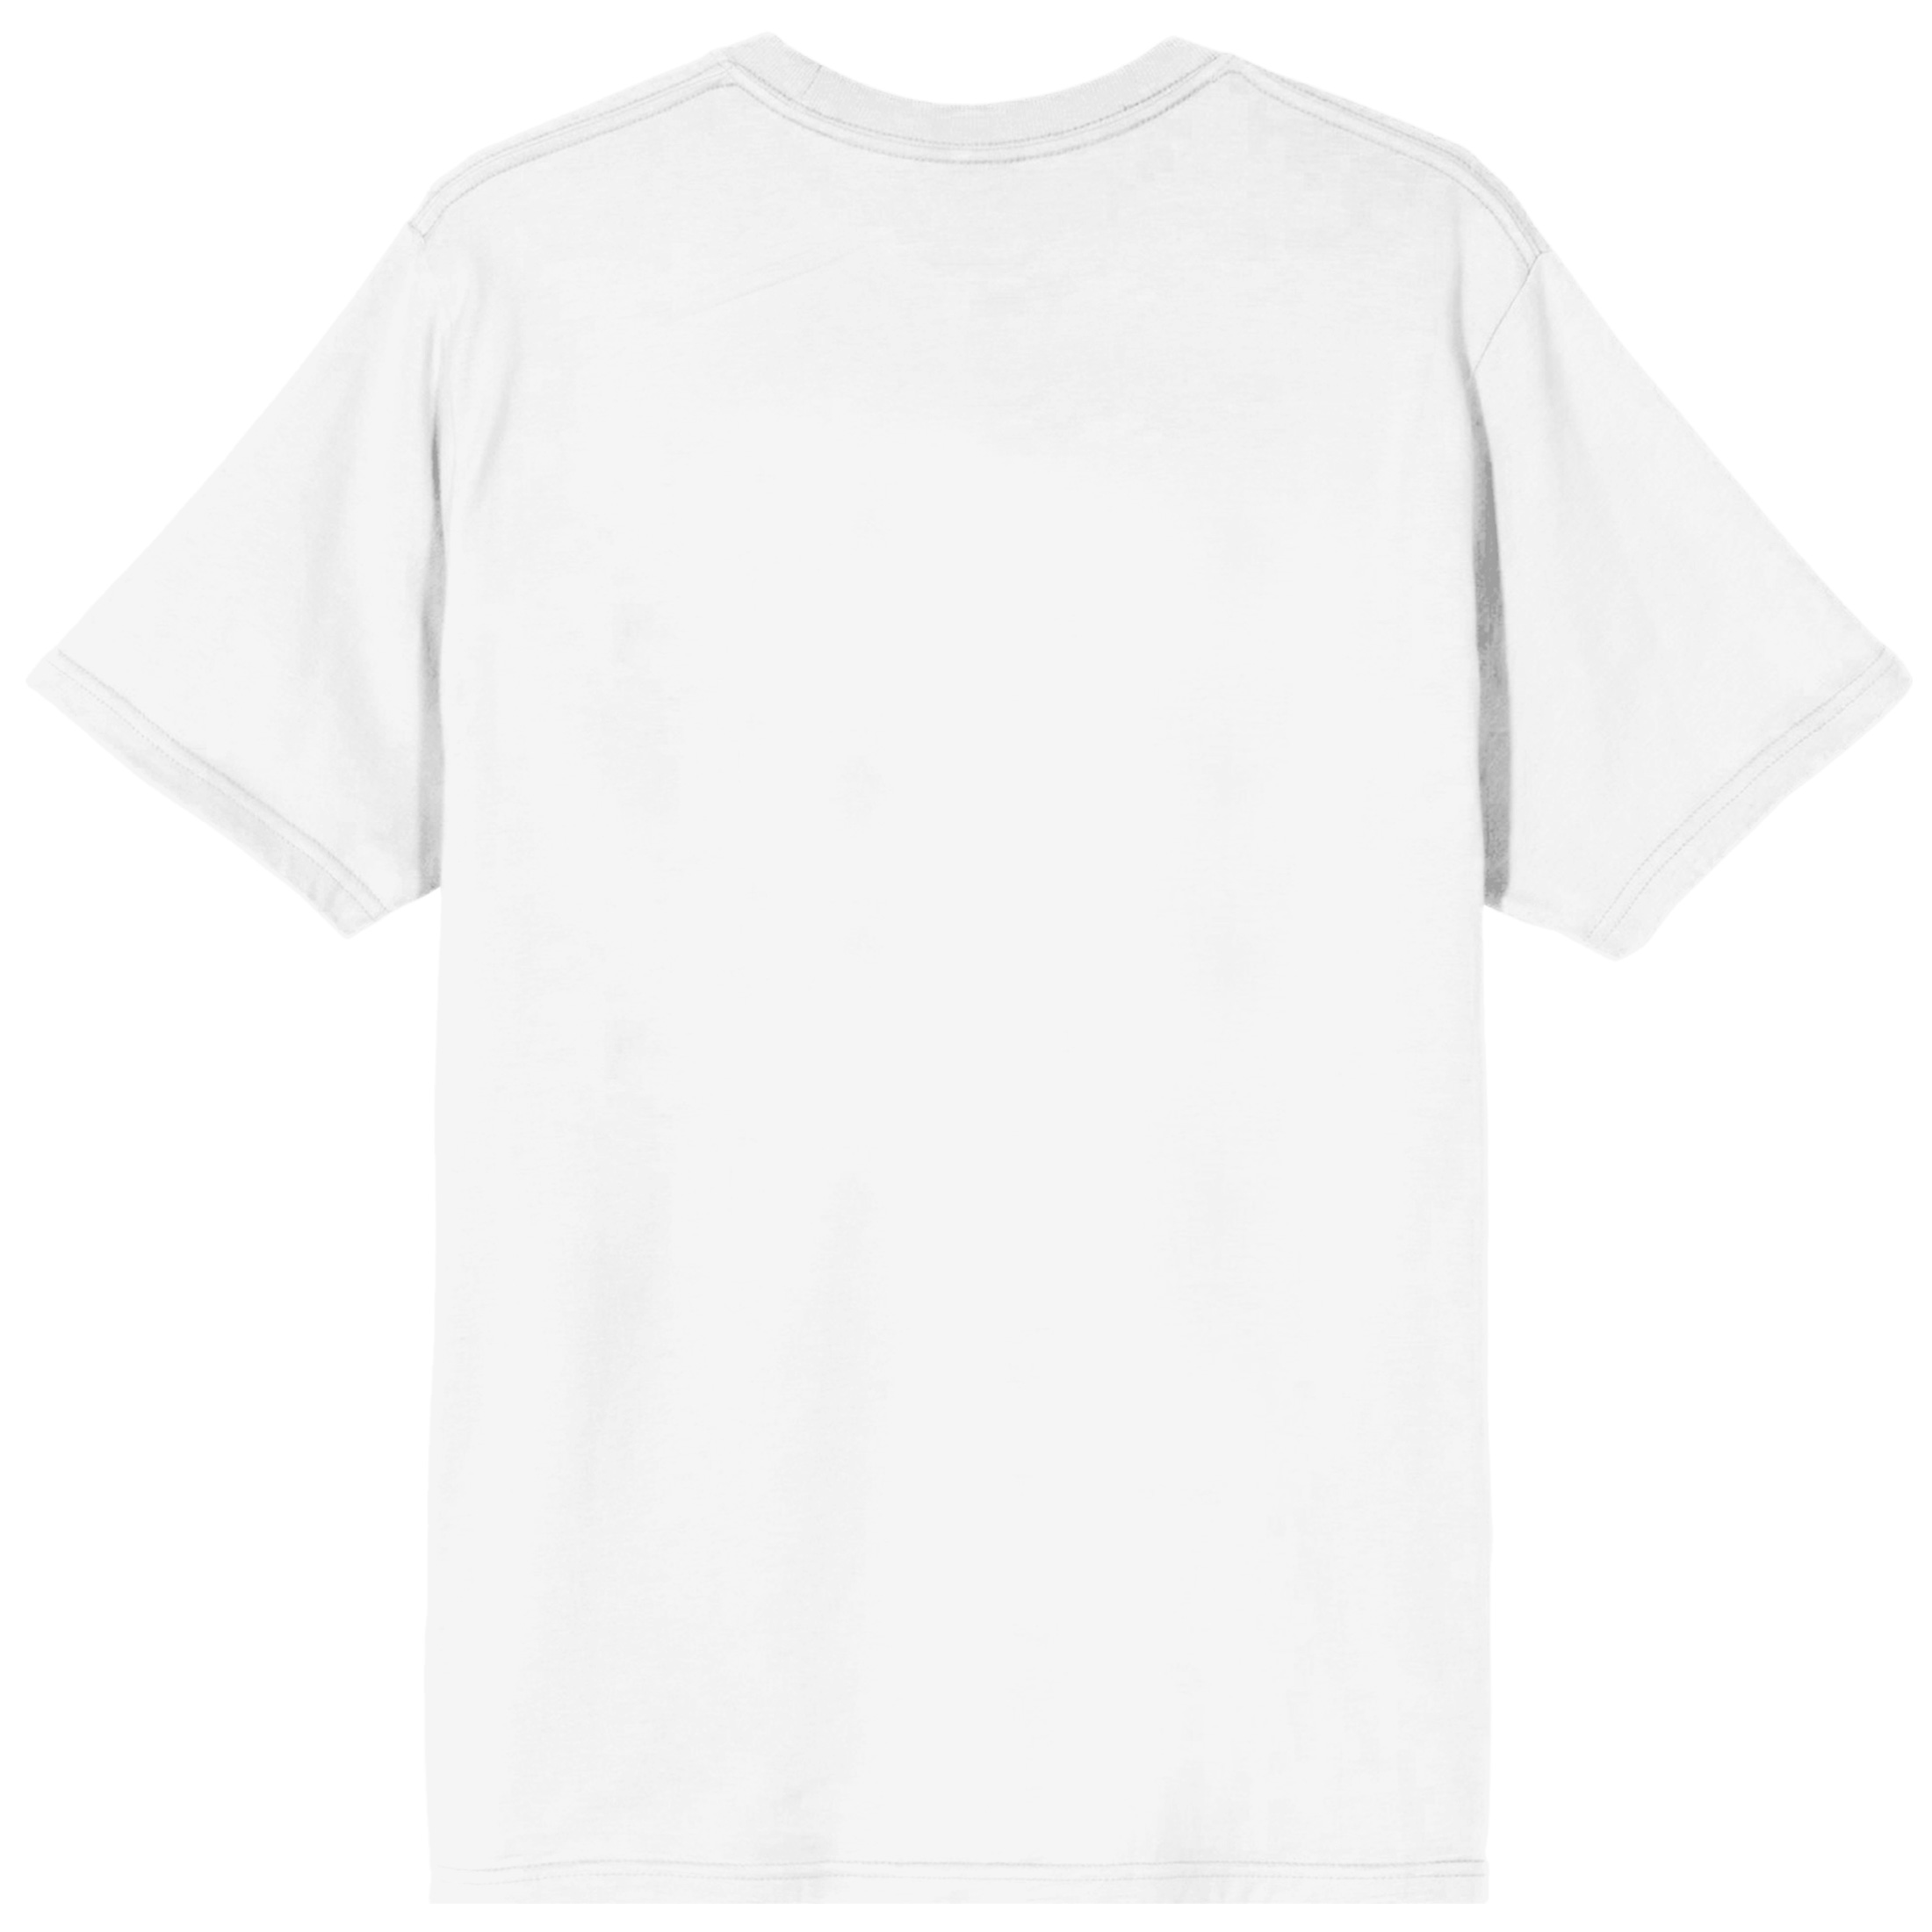 My Hero Academia Rainy Season Hero Froppy Men's White T-shirt-Small - image 4 of 4